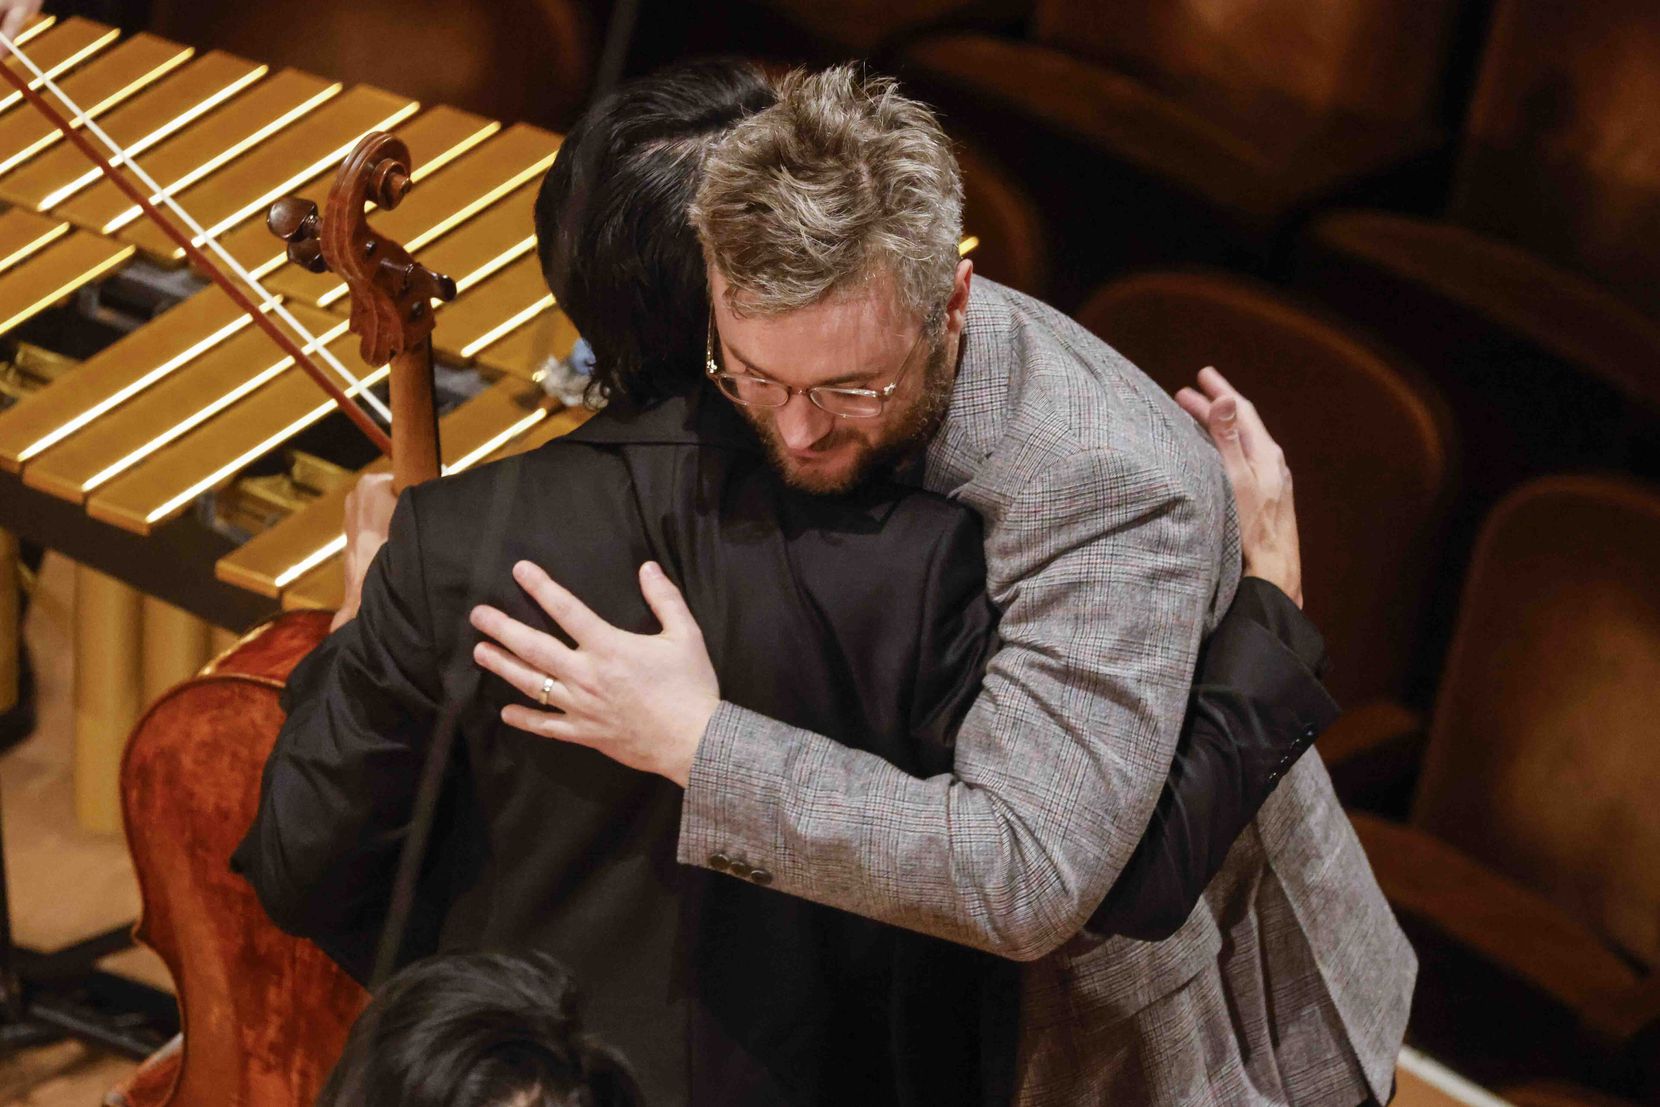 Composer Samuel Adams hugs cellist David Requiro after a performance of Adams' 'Sundial'...